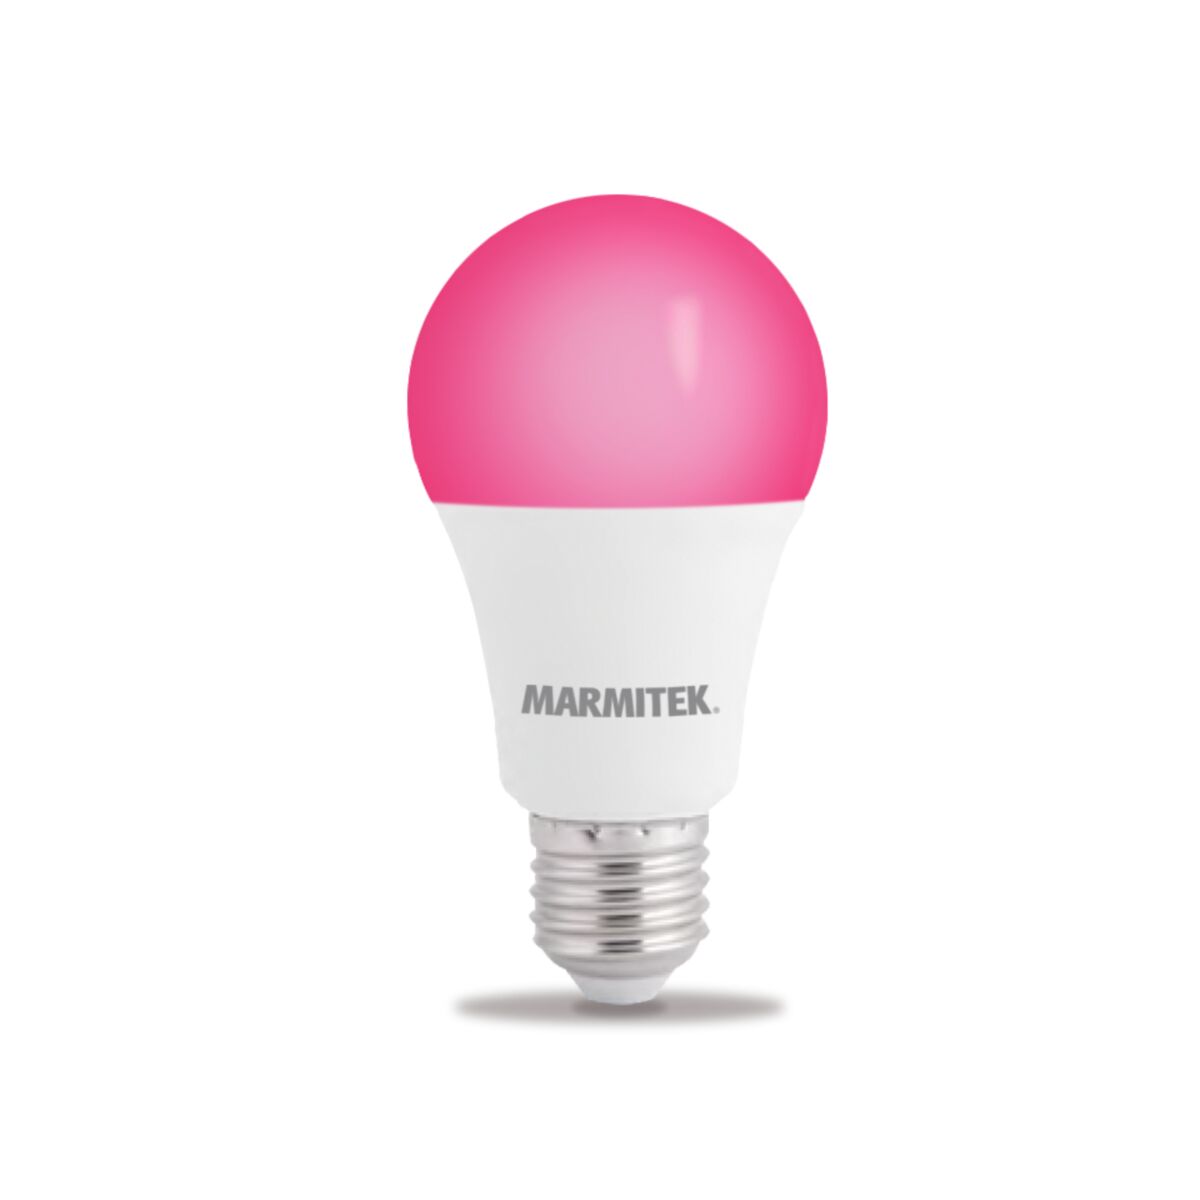 Glow MO - Smart Lampe - E27 - Steuerung per App - Farbe